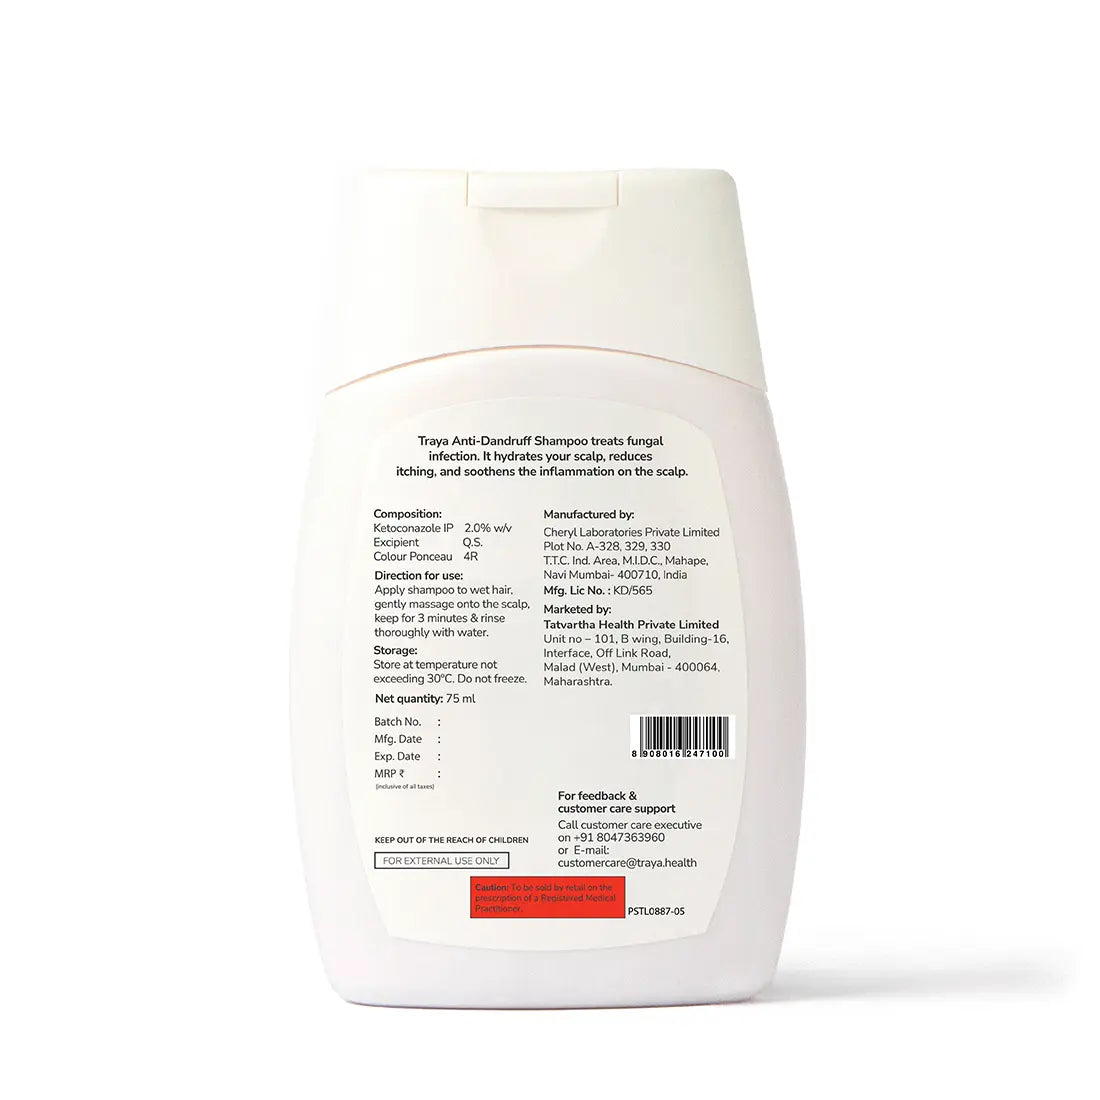 Anti-Dandruff Shampoo with Ichthammol & Aloevera | Paraben Free